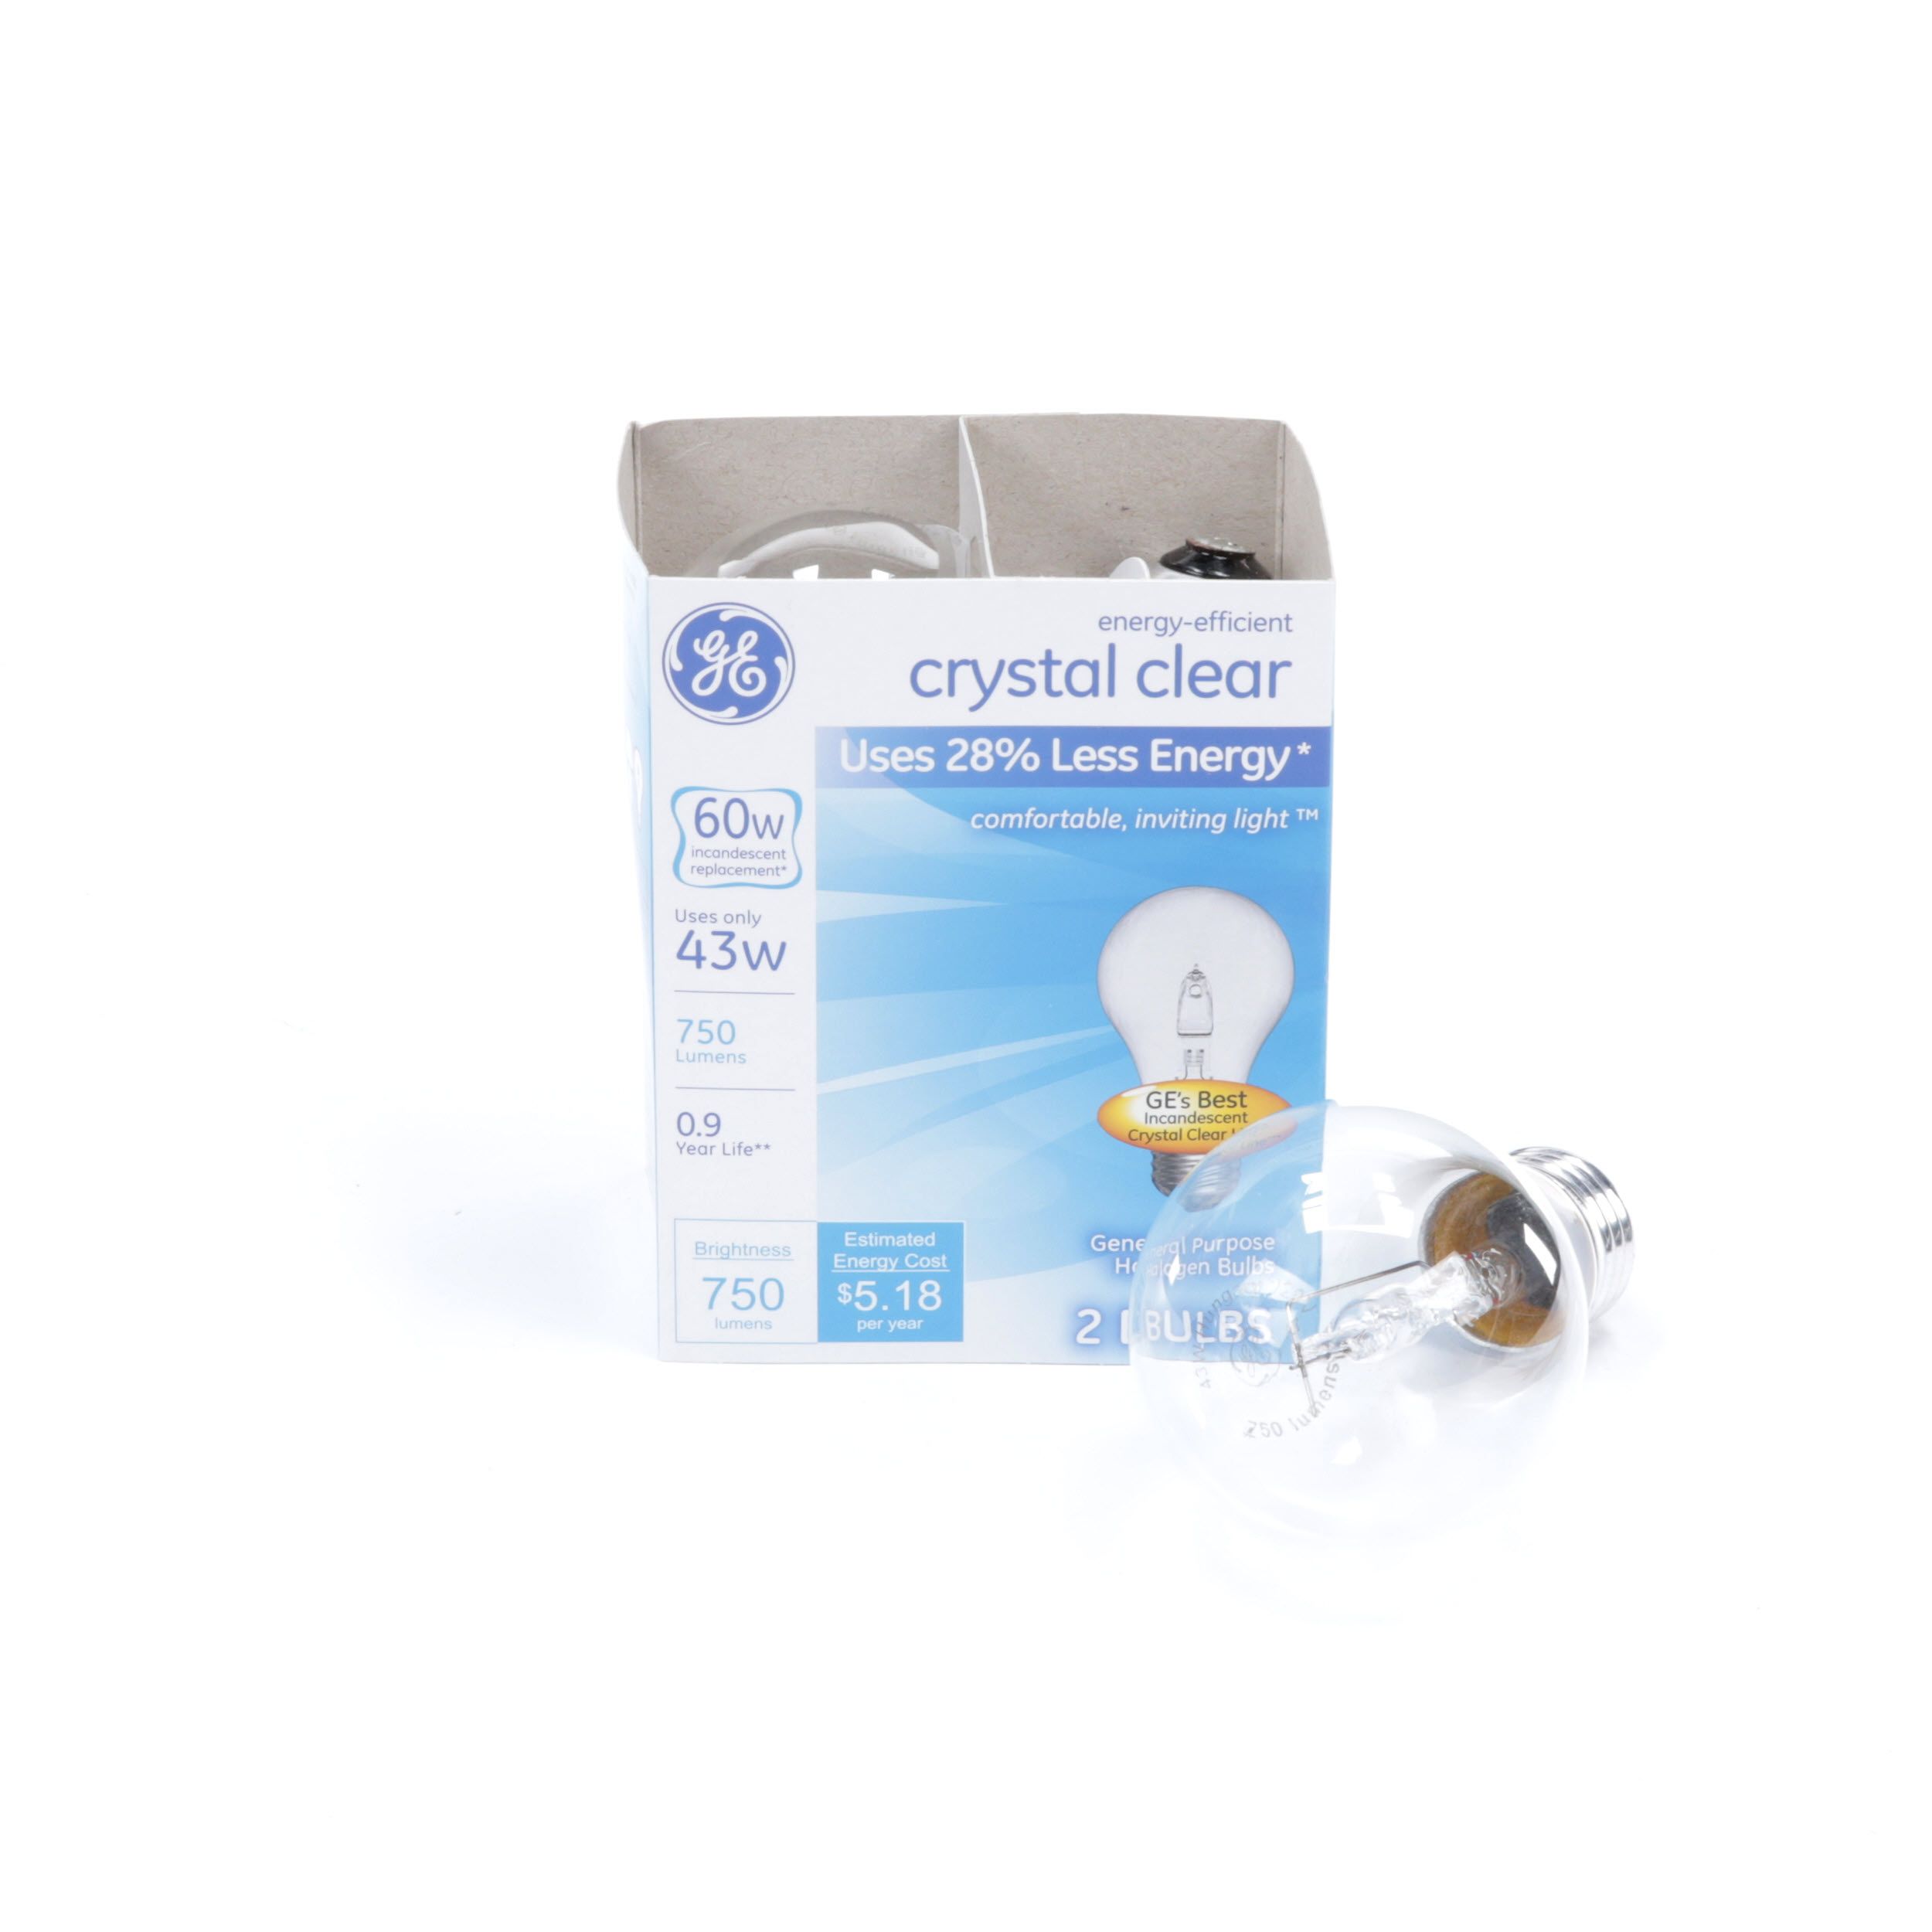 NEW GE 97490-24 60-Watt Crystal Clear Incandescent A19 Light Bulbs Details about   24 